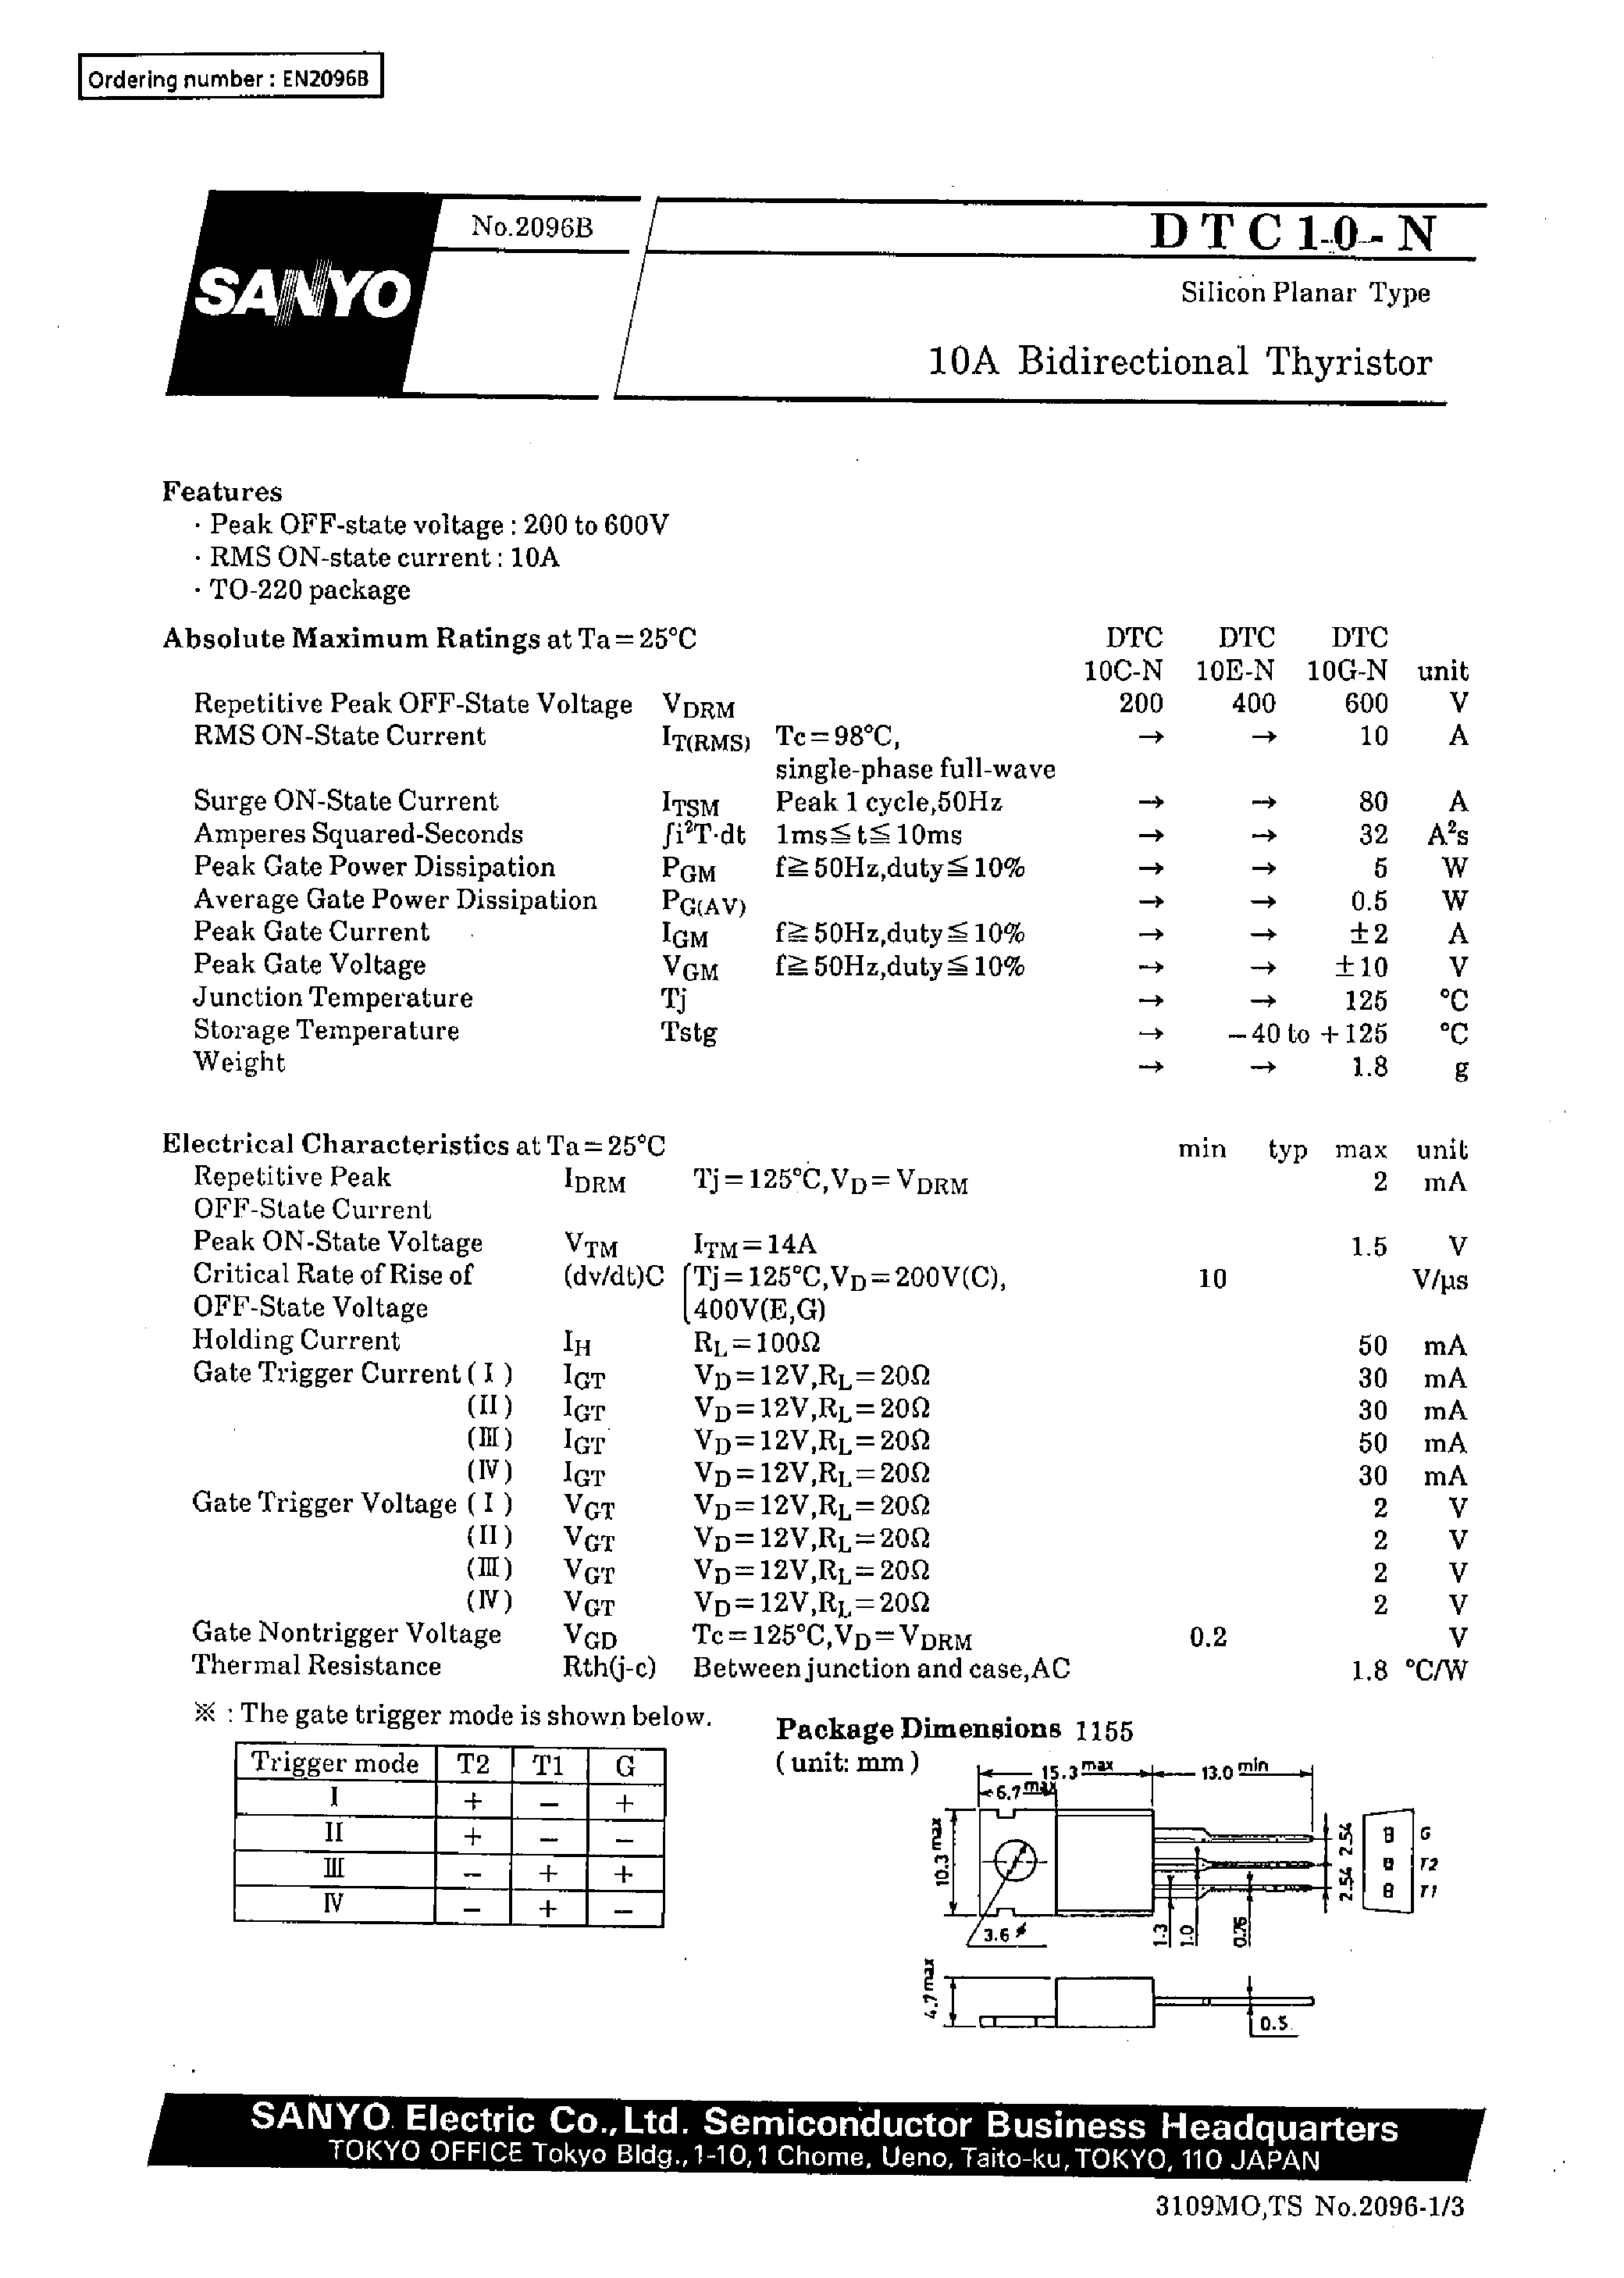 Datasheet DTC10G-N - 10A Bidirectional Thyristor page 1